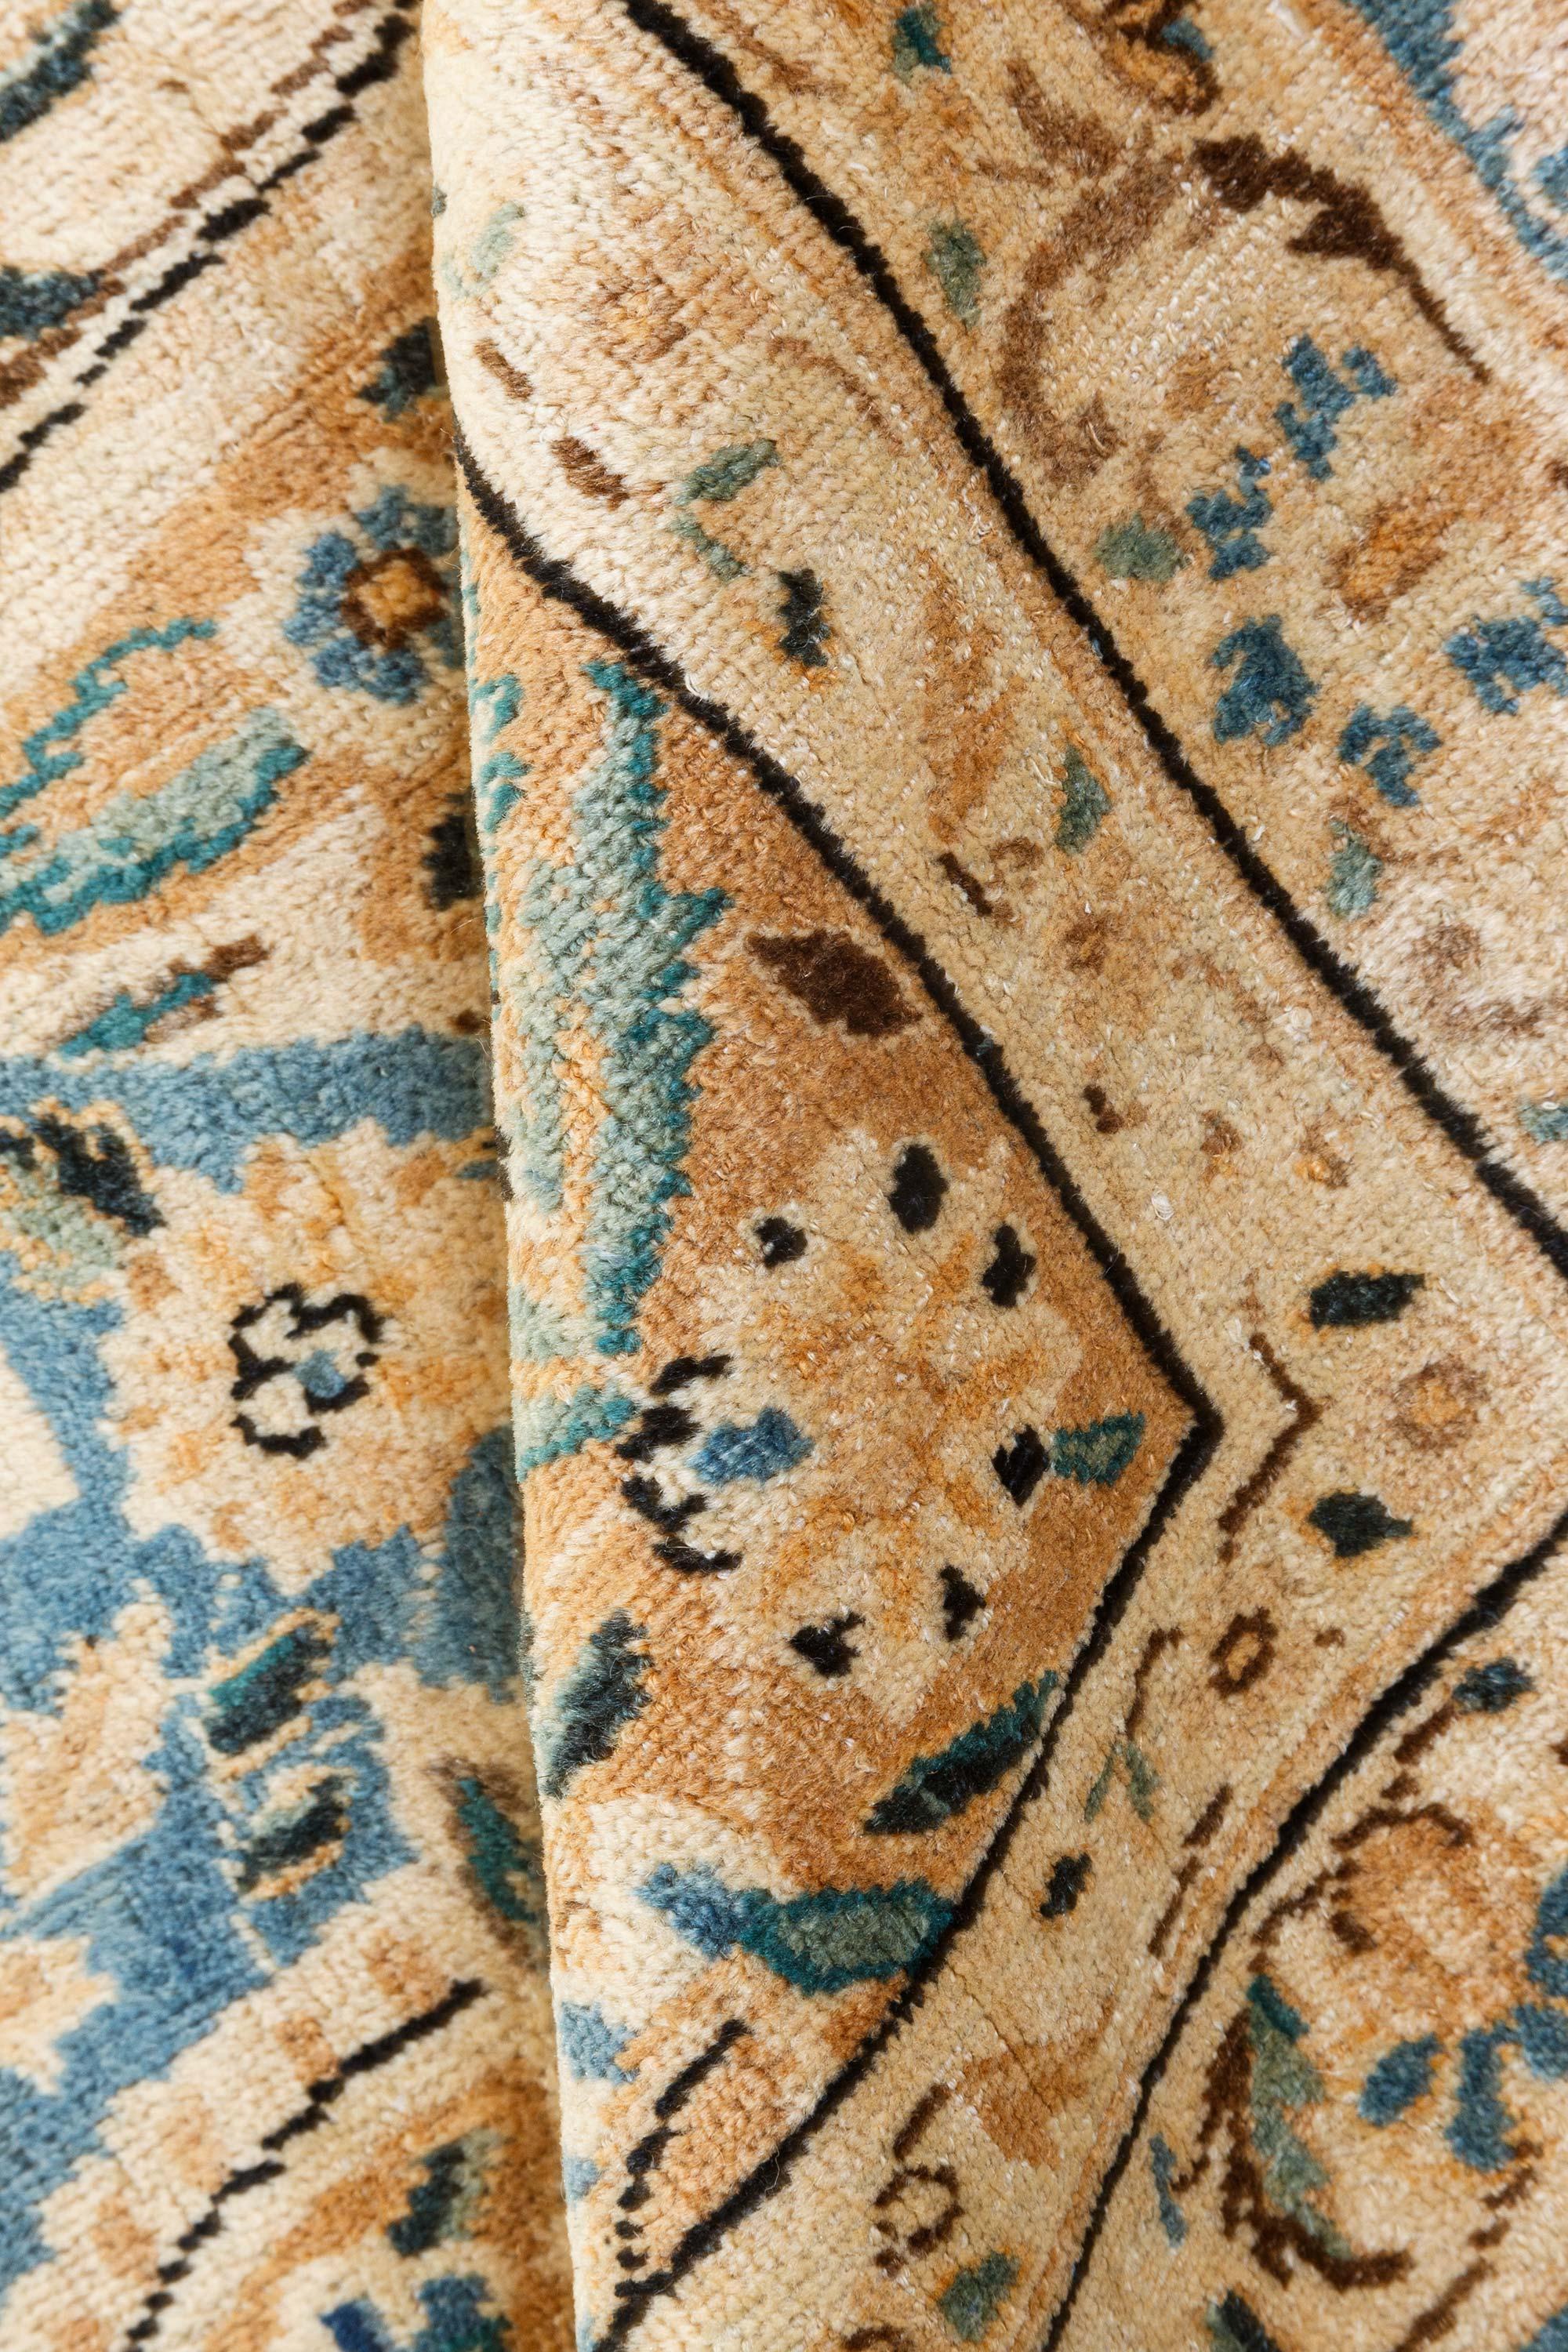 Authentic 1900s Persian Tabriz handmade wool rug
Size: 9'10